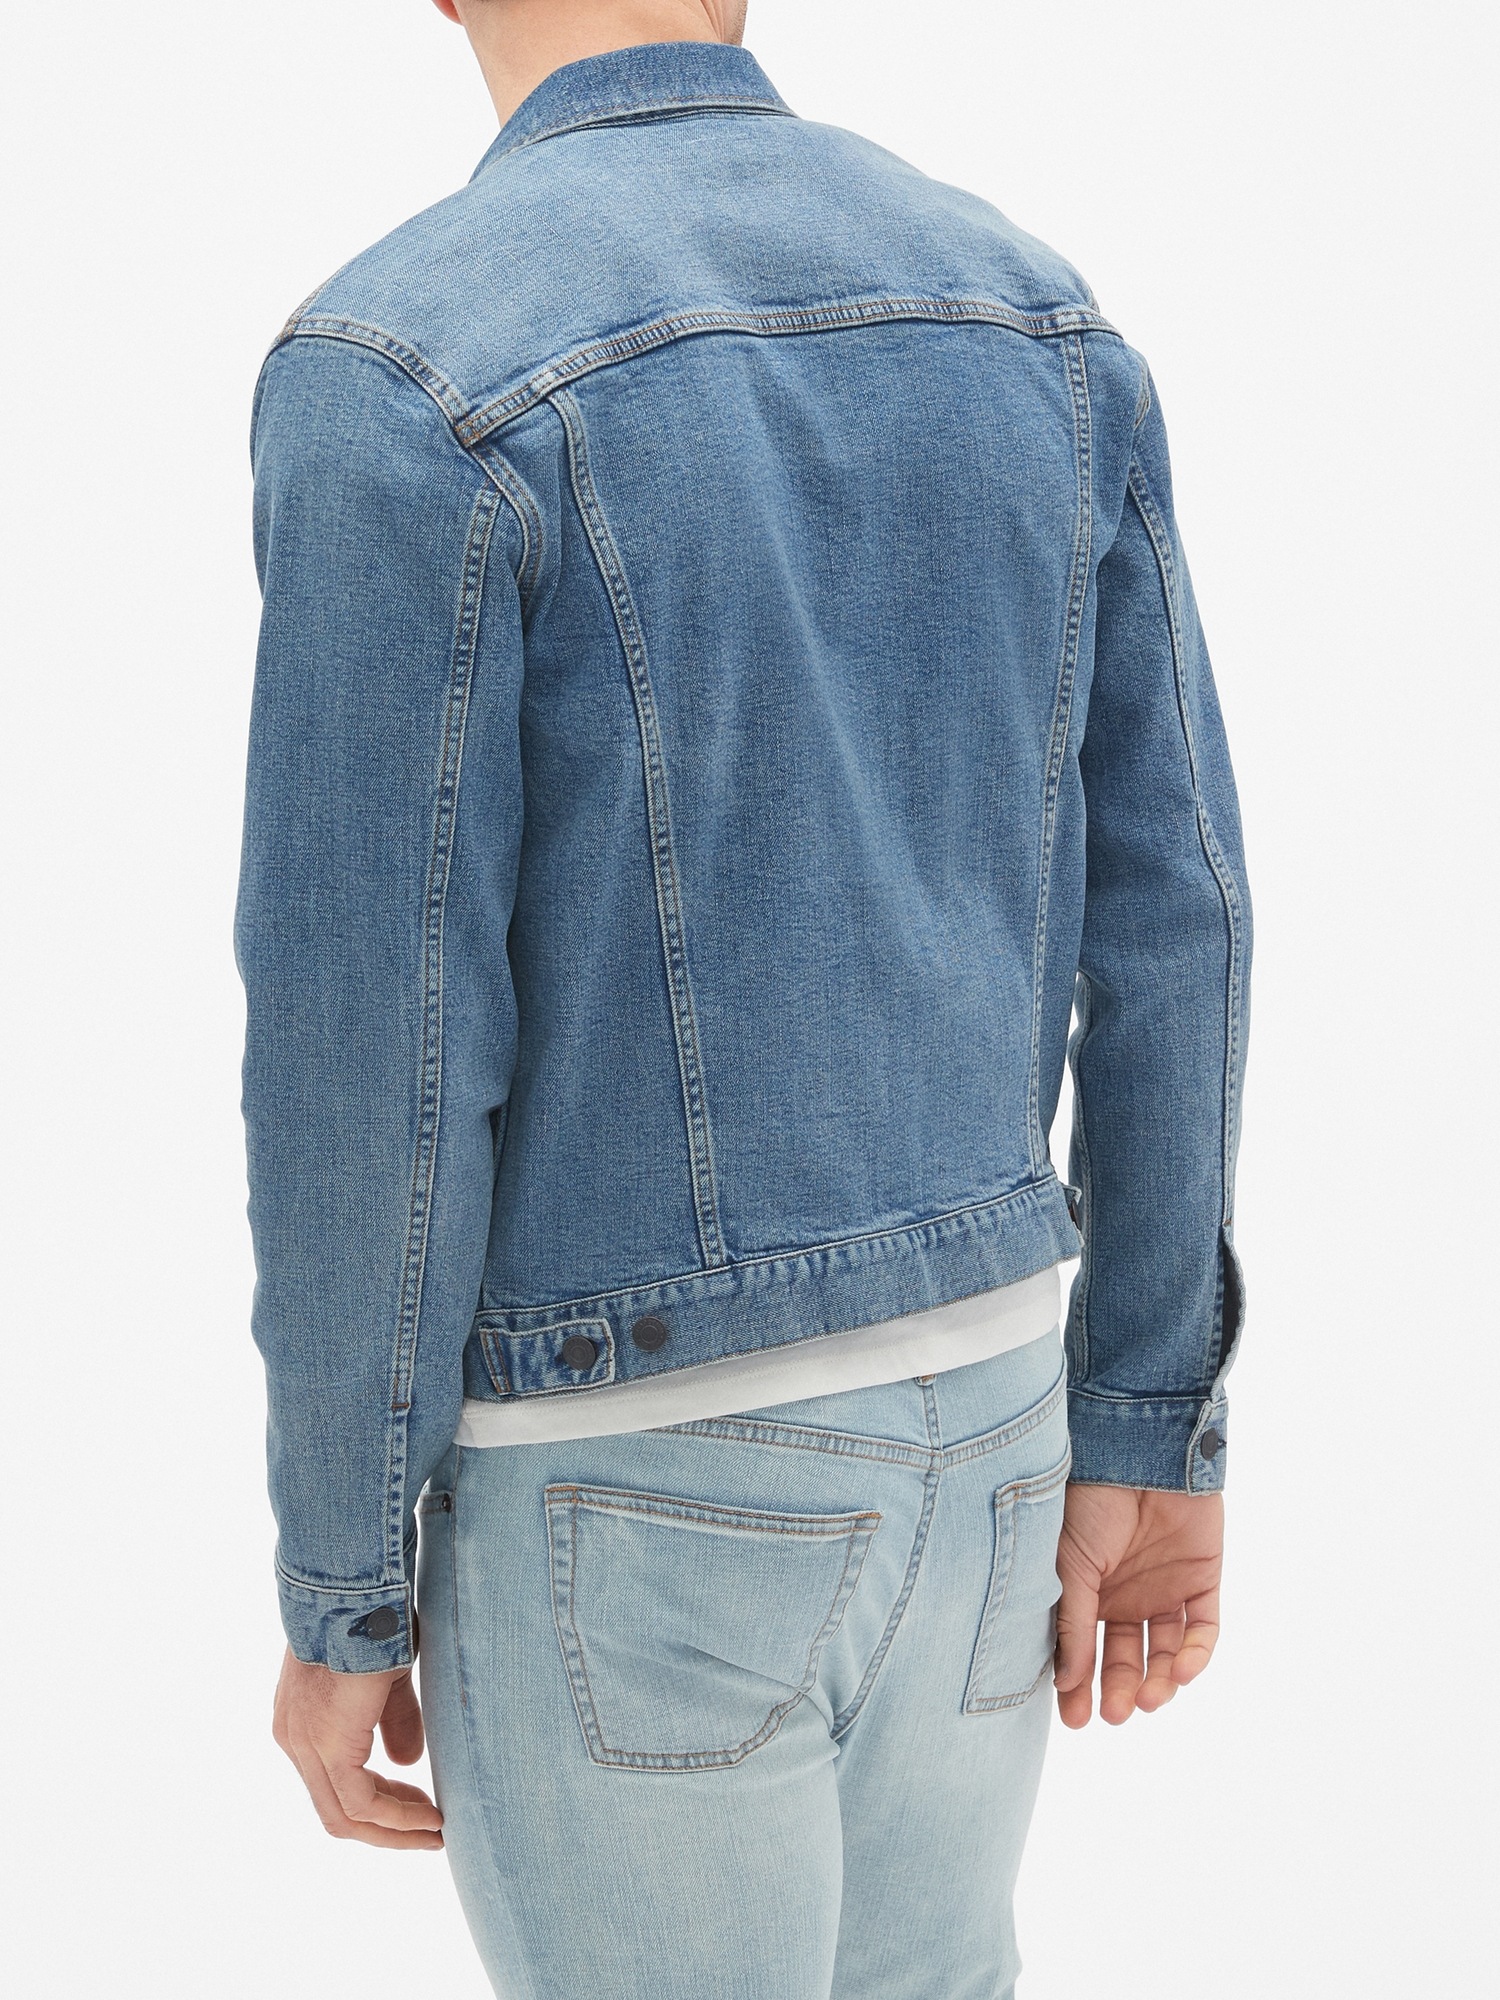 gap factory jean jacket